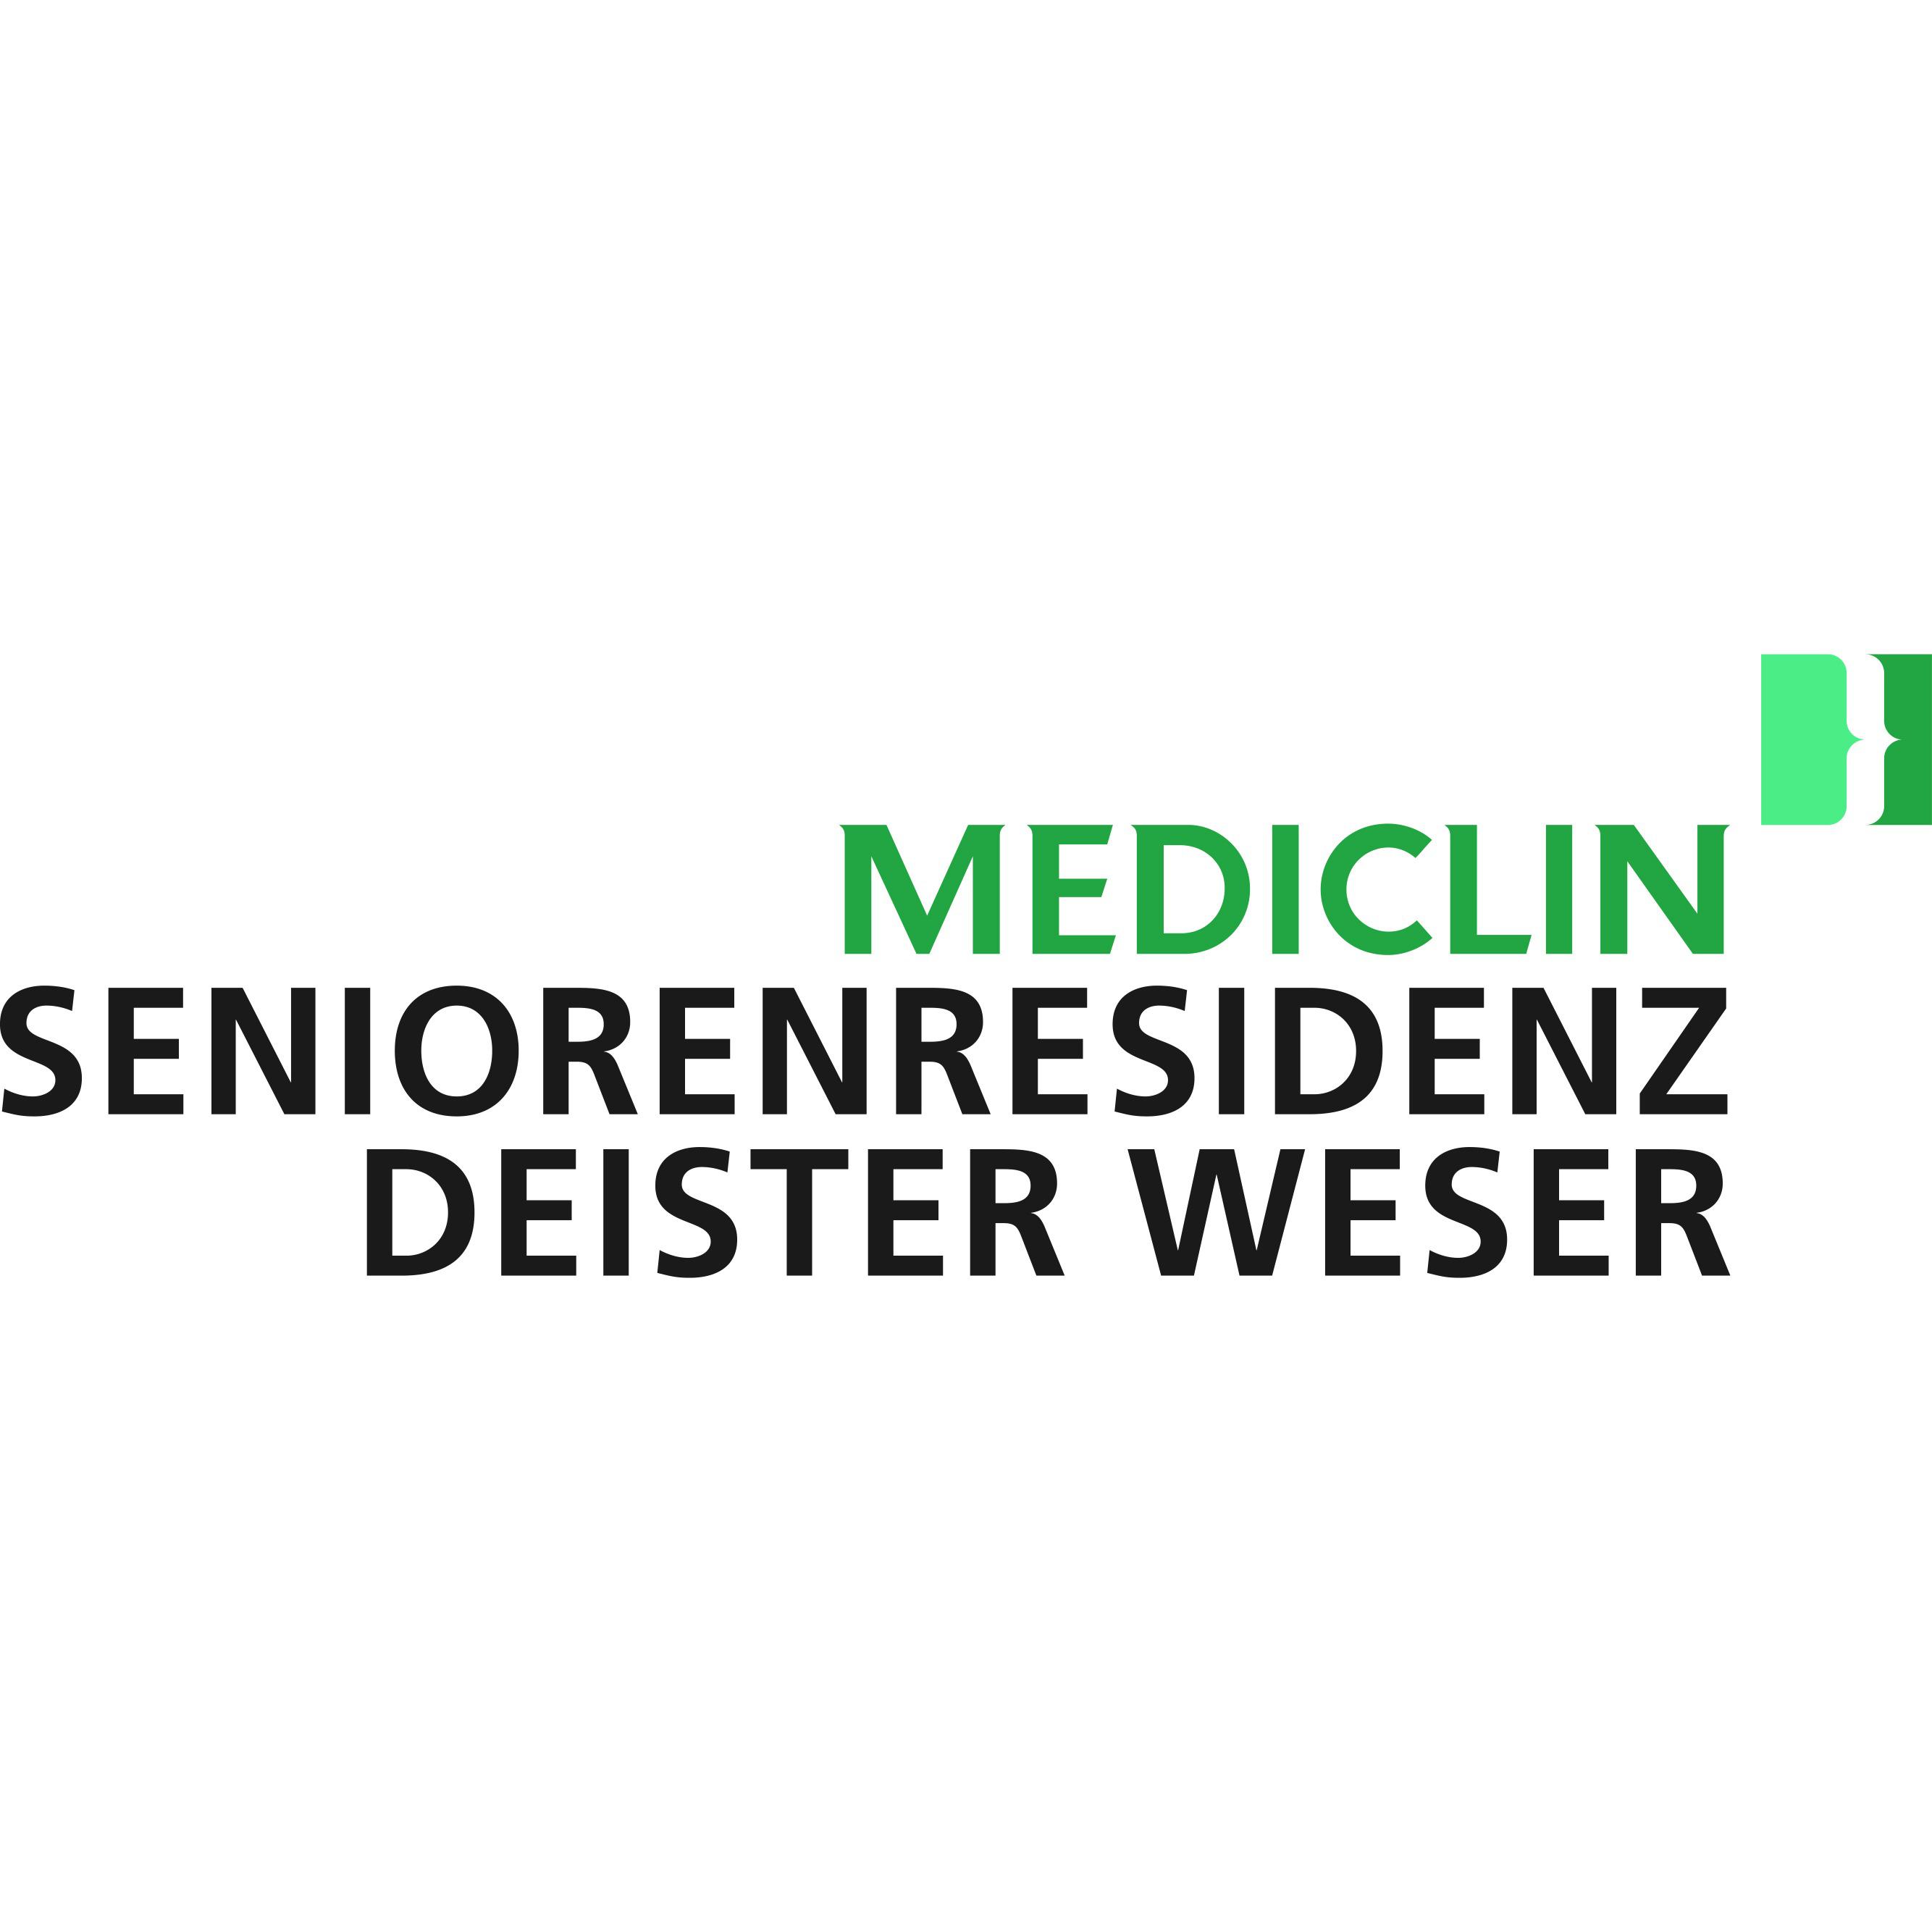 MEDICLIN Seniorenresidenz Deister Weser - Retirement Home - Bad Münder - 05042 600520 Germany | ShowMeLocal.com